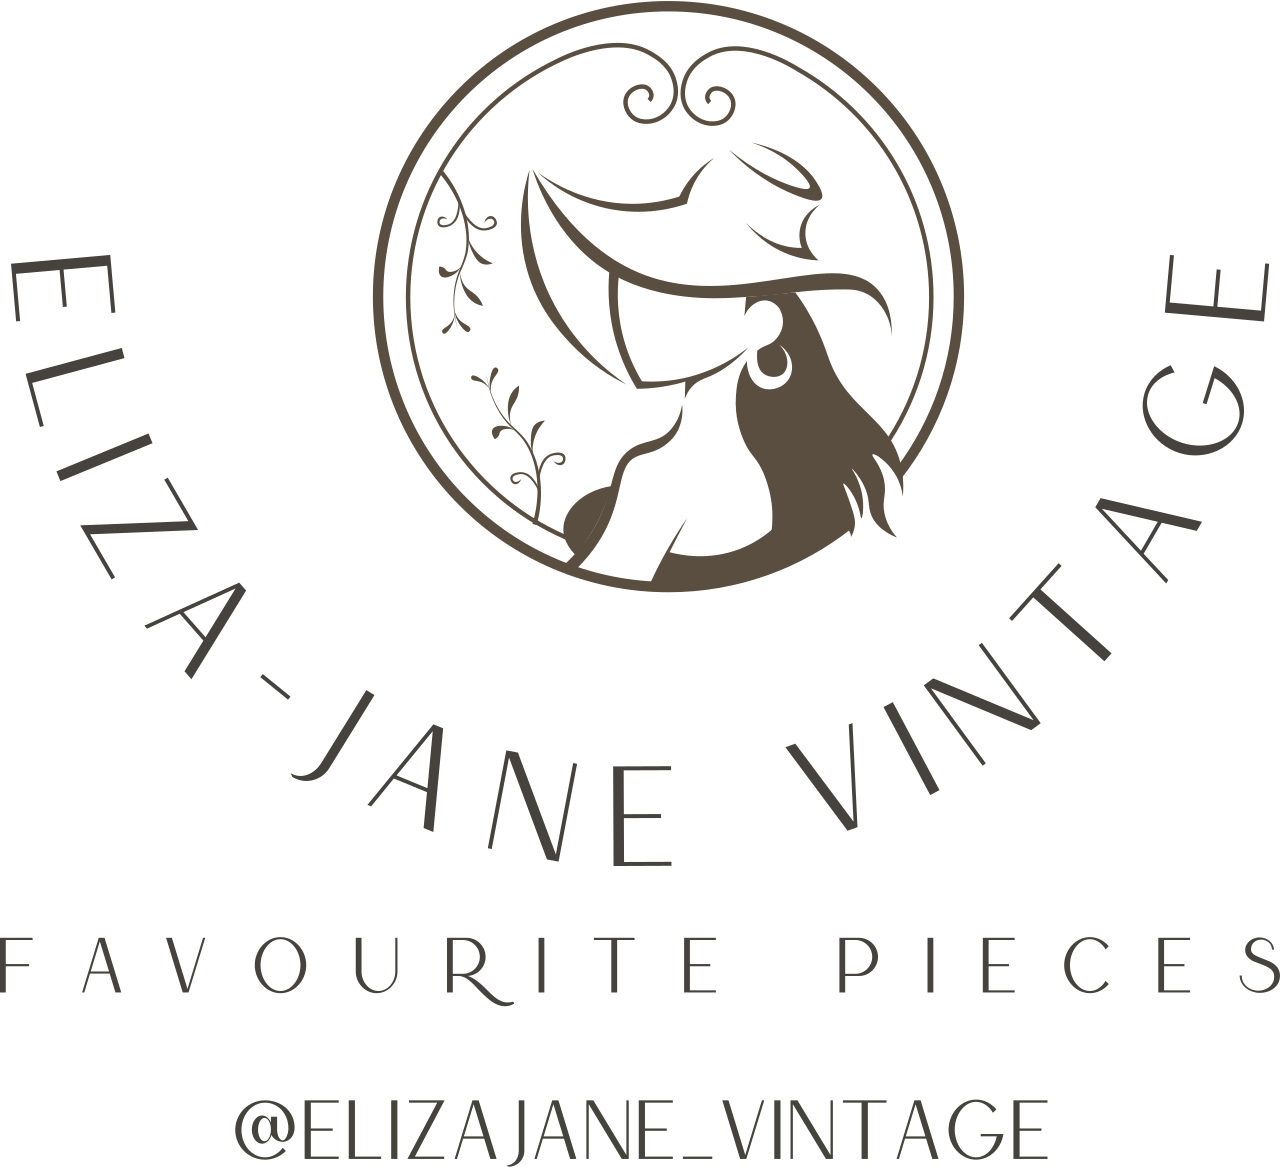 Eliza-Jane Vintage's logo